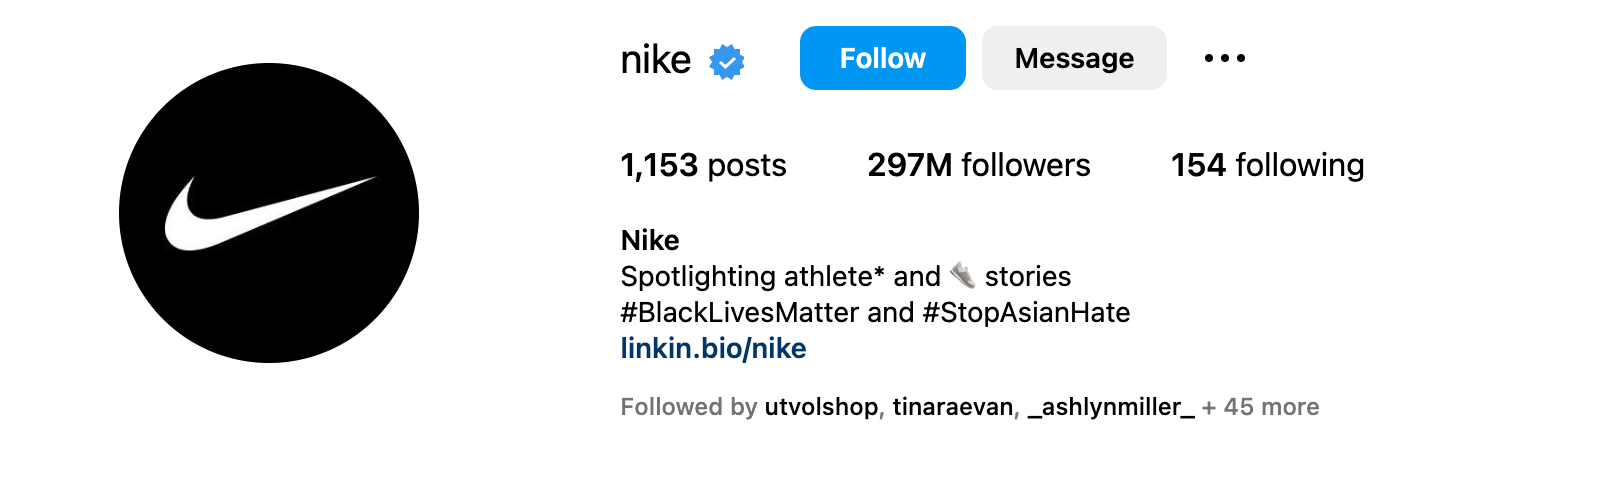 Instagram Bio ideas - Nike